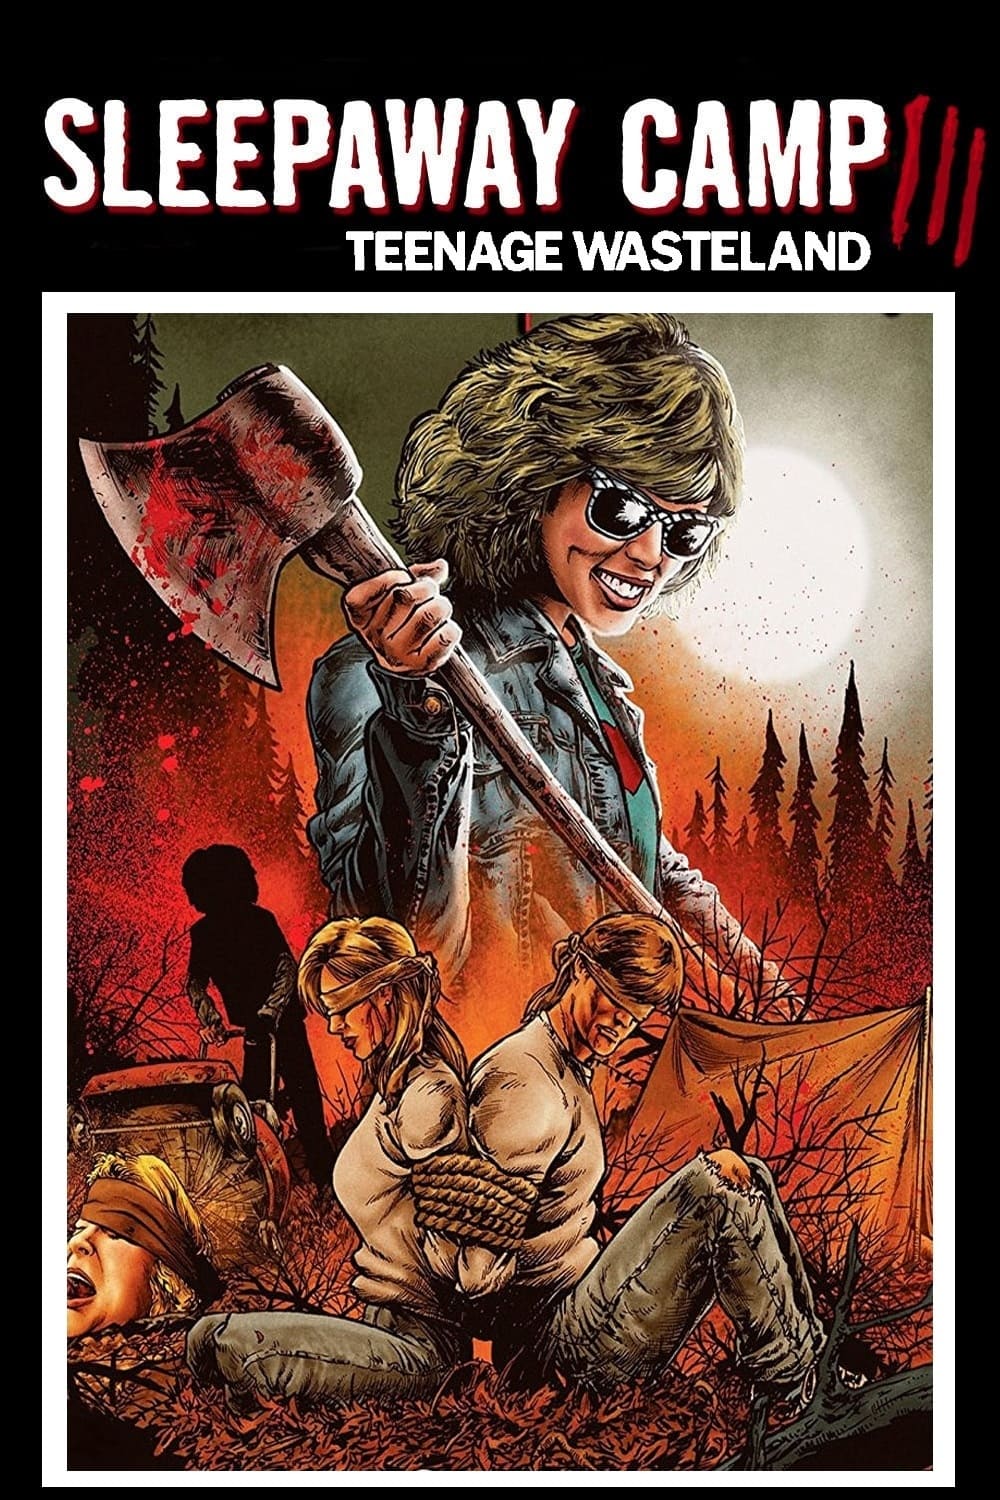 دانلود فیلم Sleepaway Camp III: Teenage Wasteland 1989 - خواب دور از کمپ 3 : زمین بایر نوجوانی